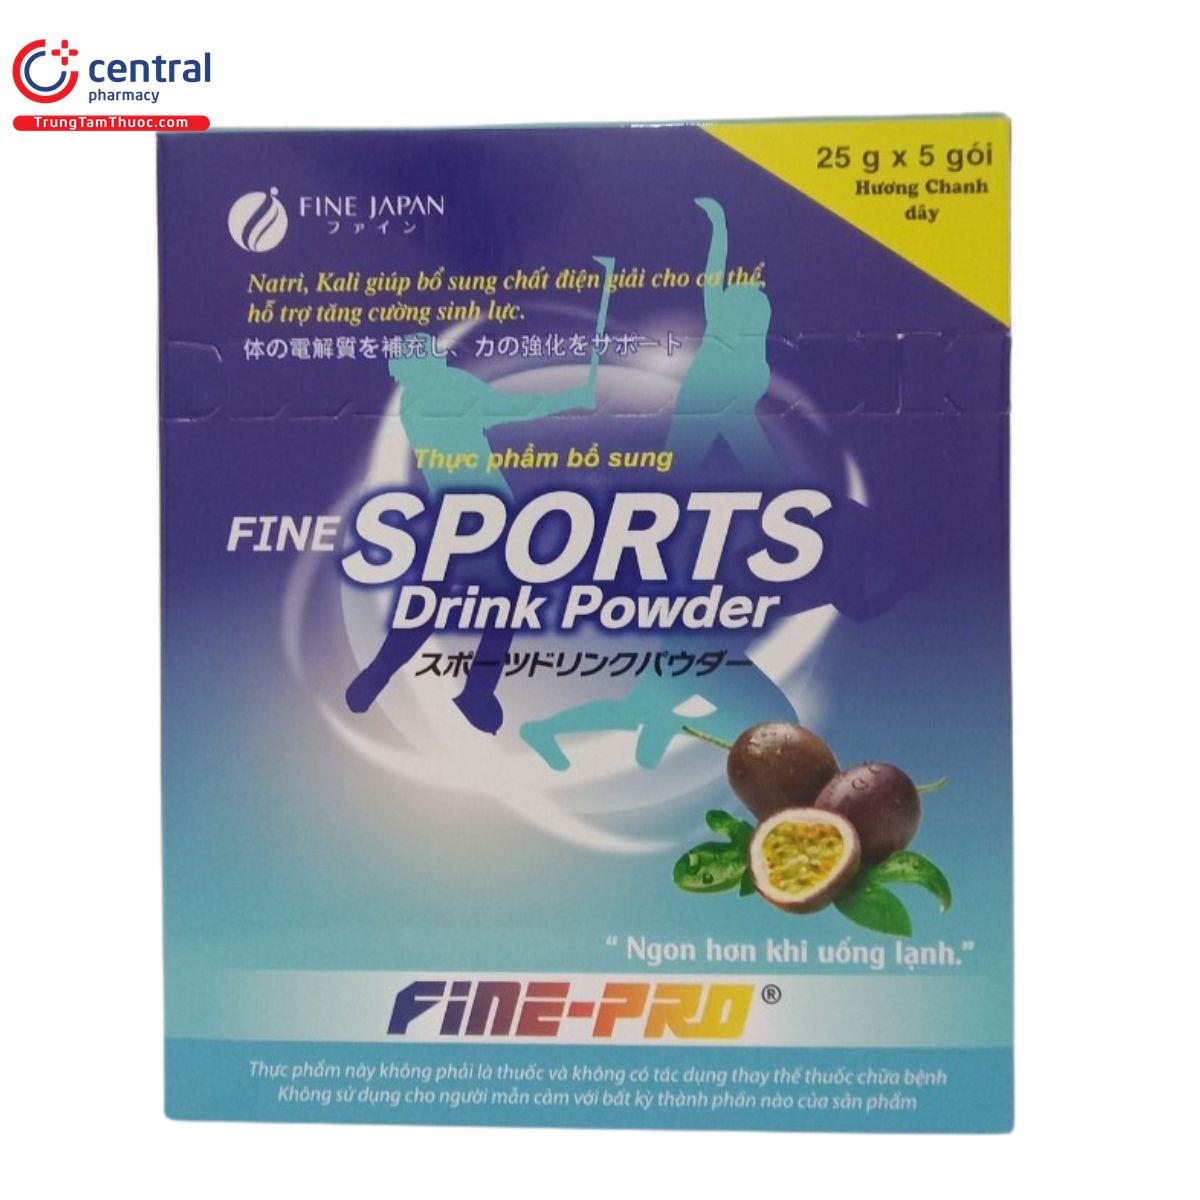 fine sports drink powder 11 Q6537